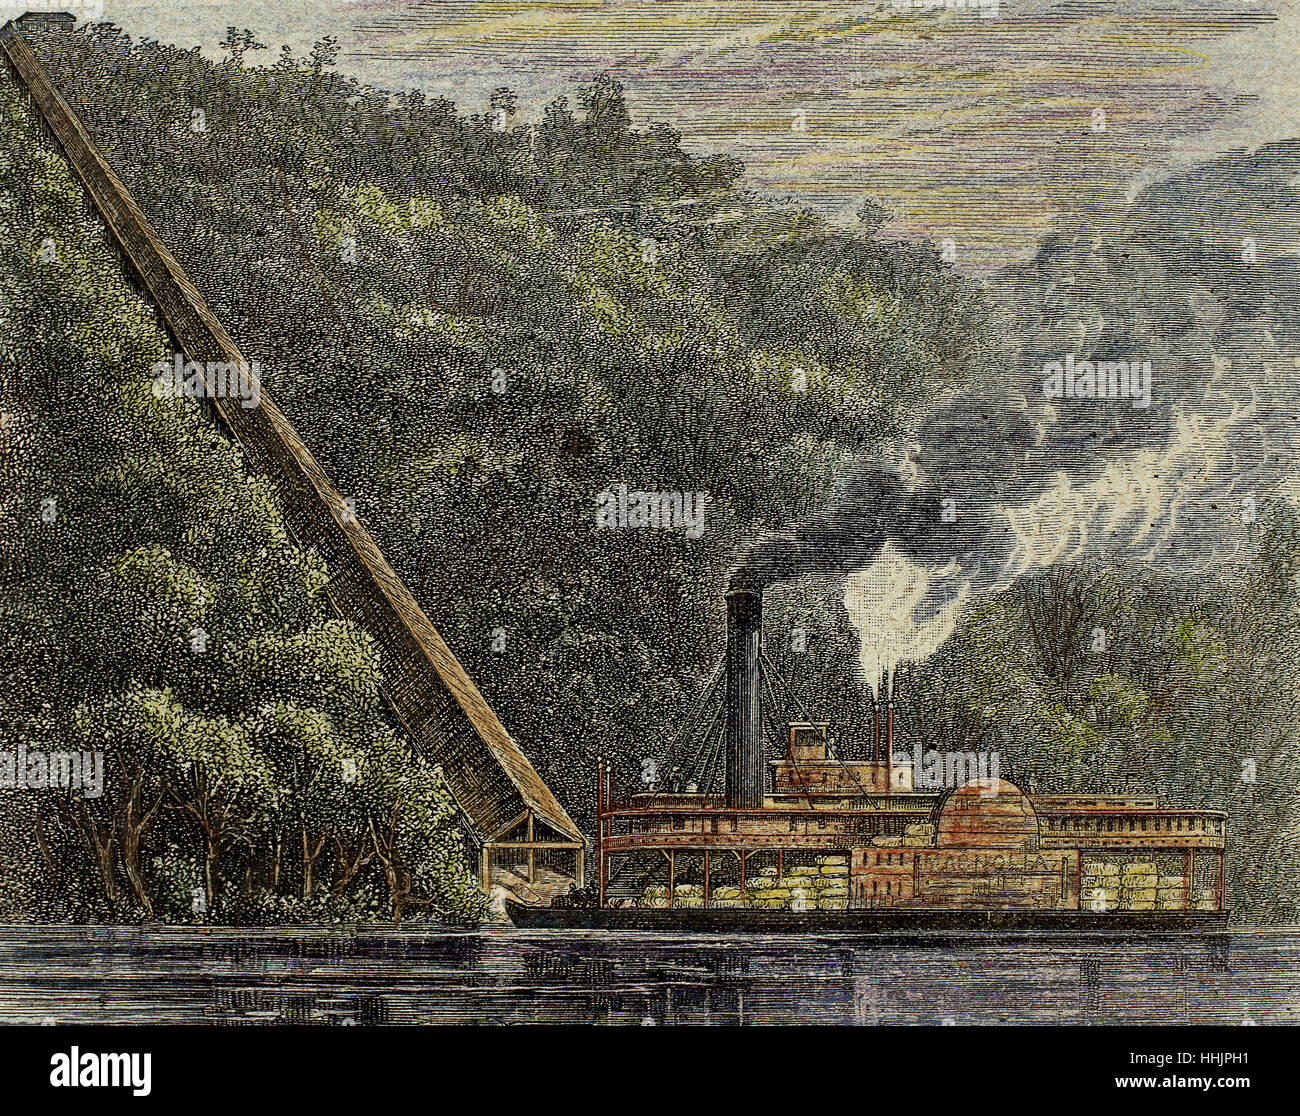 United States. South Carolina. Cotton planting. Steamboat loading up cotton sacks. Colored engraving, 1888 Stock Photo